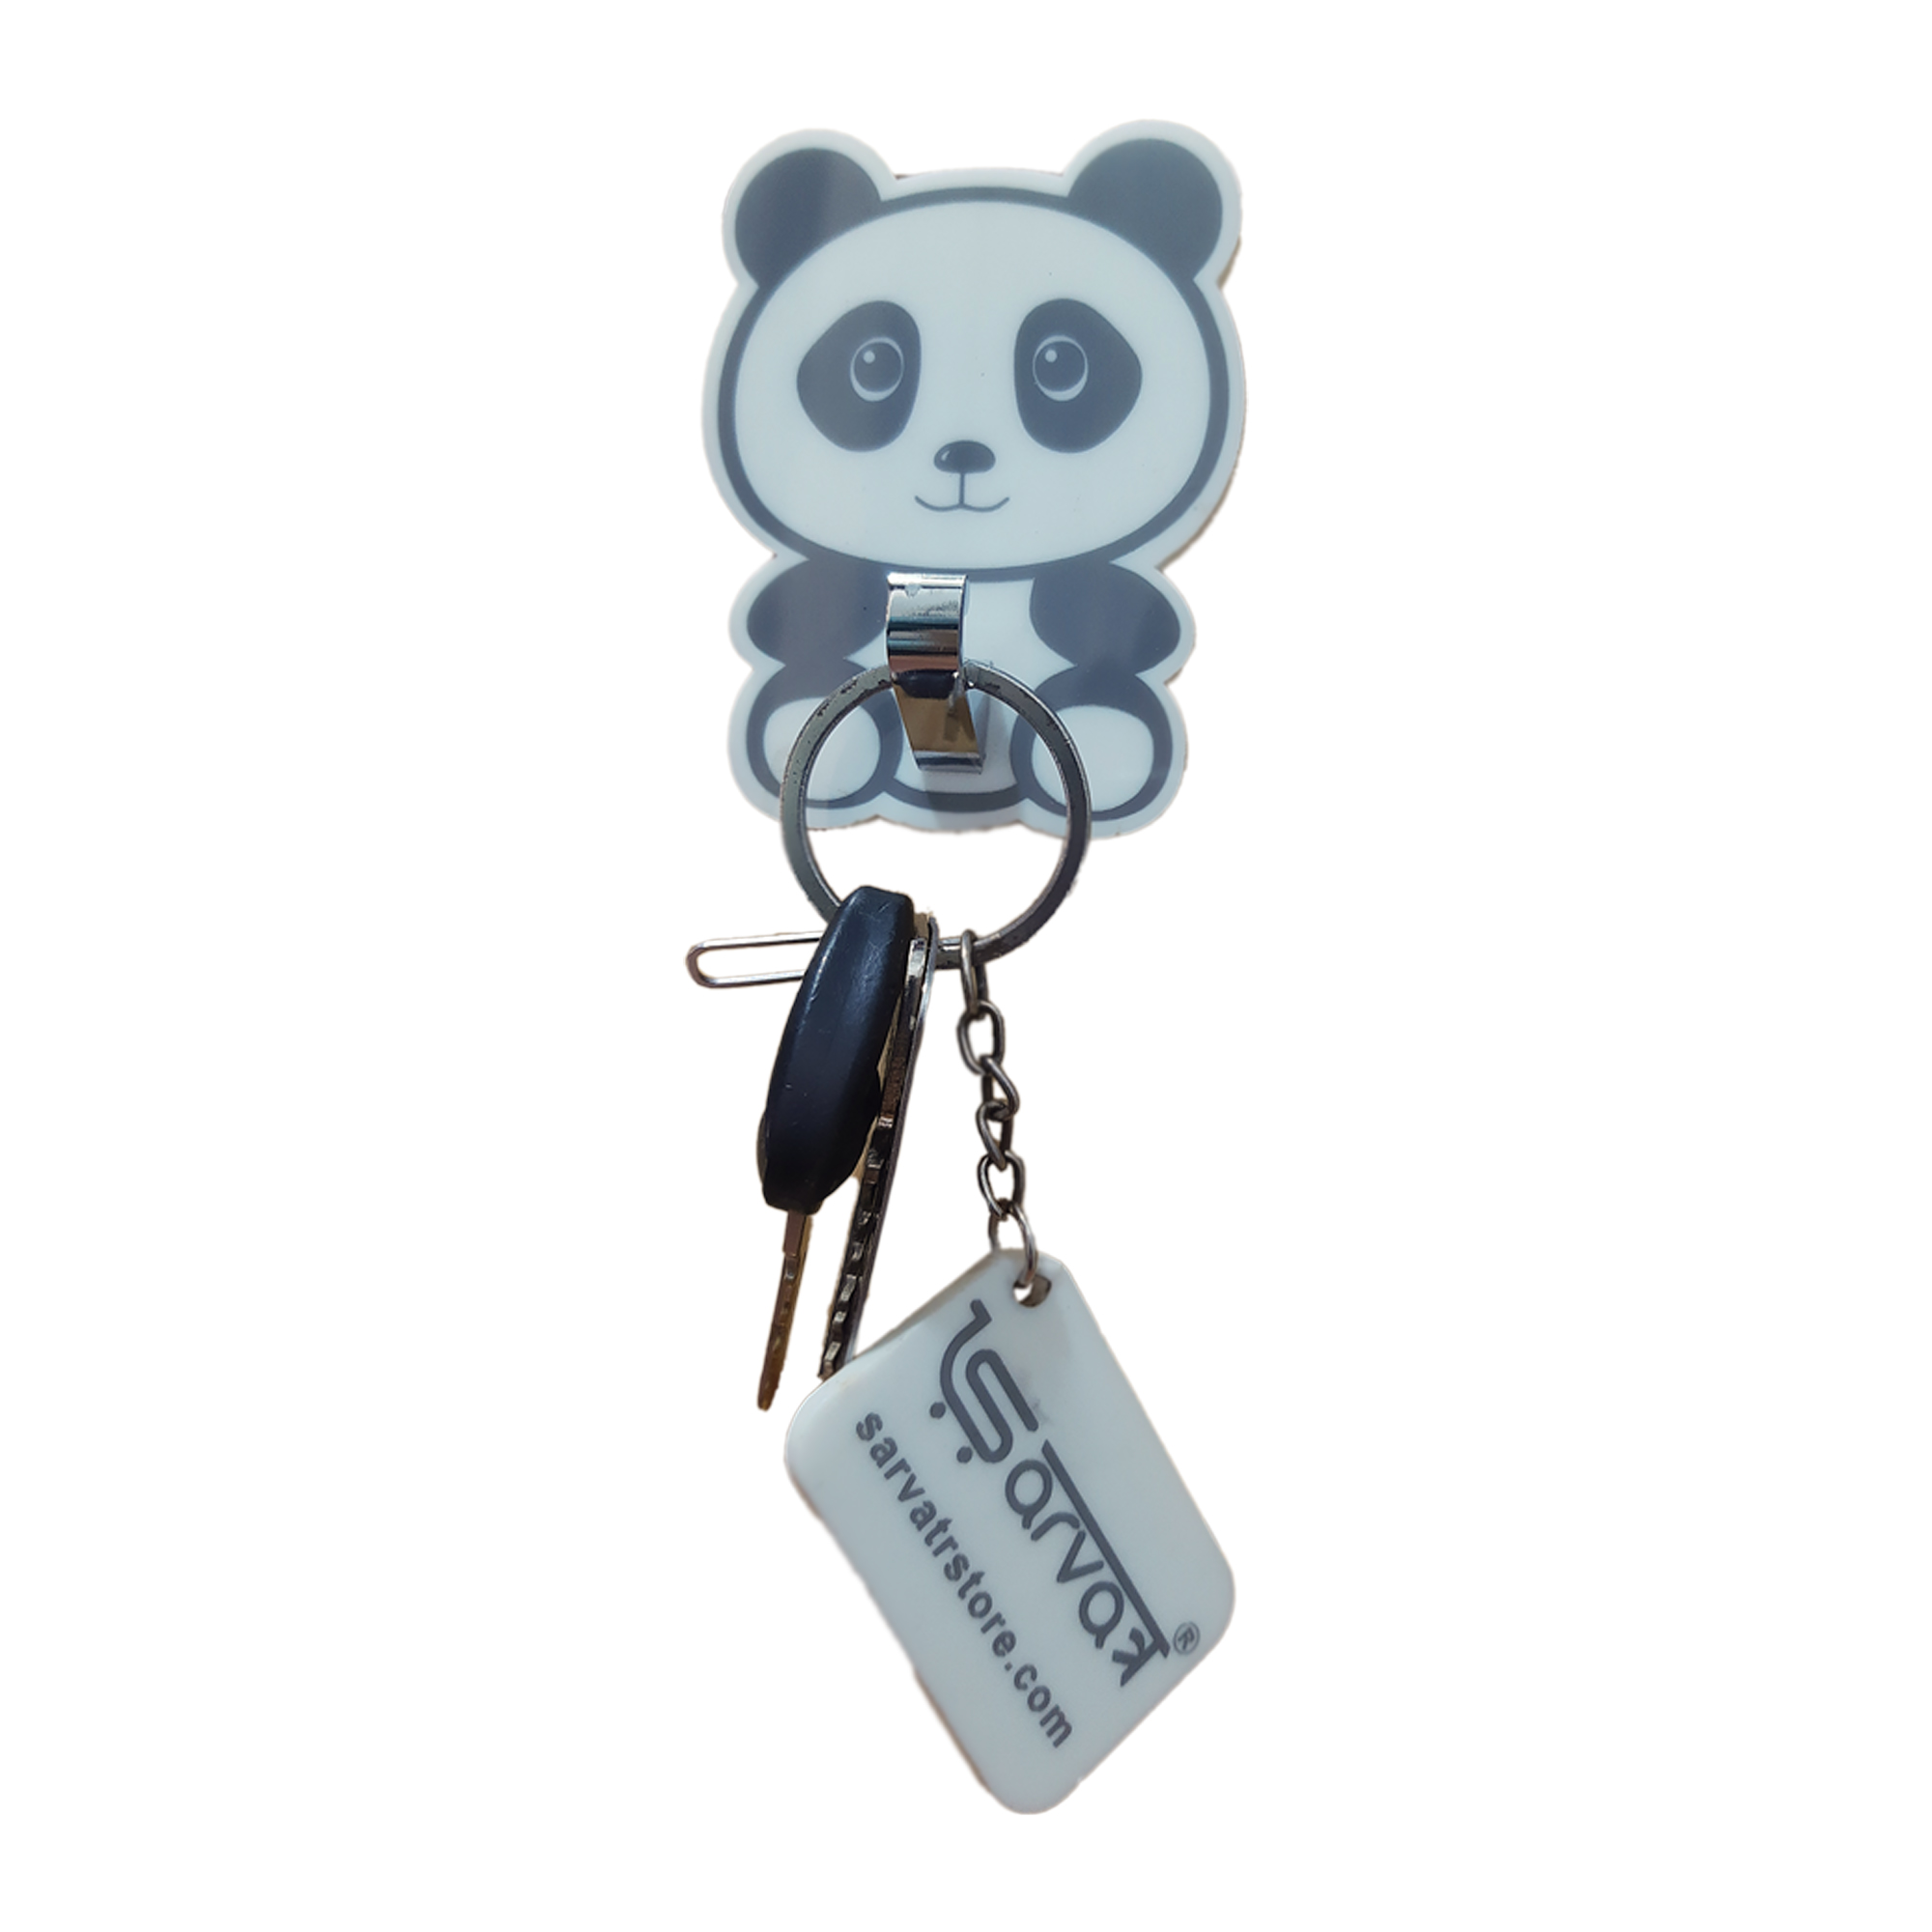 Keys holder wall mounted Panda in white